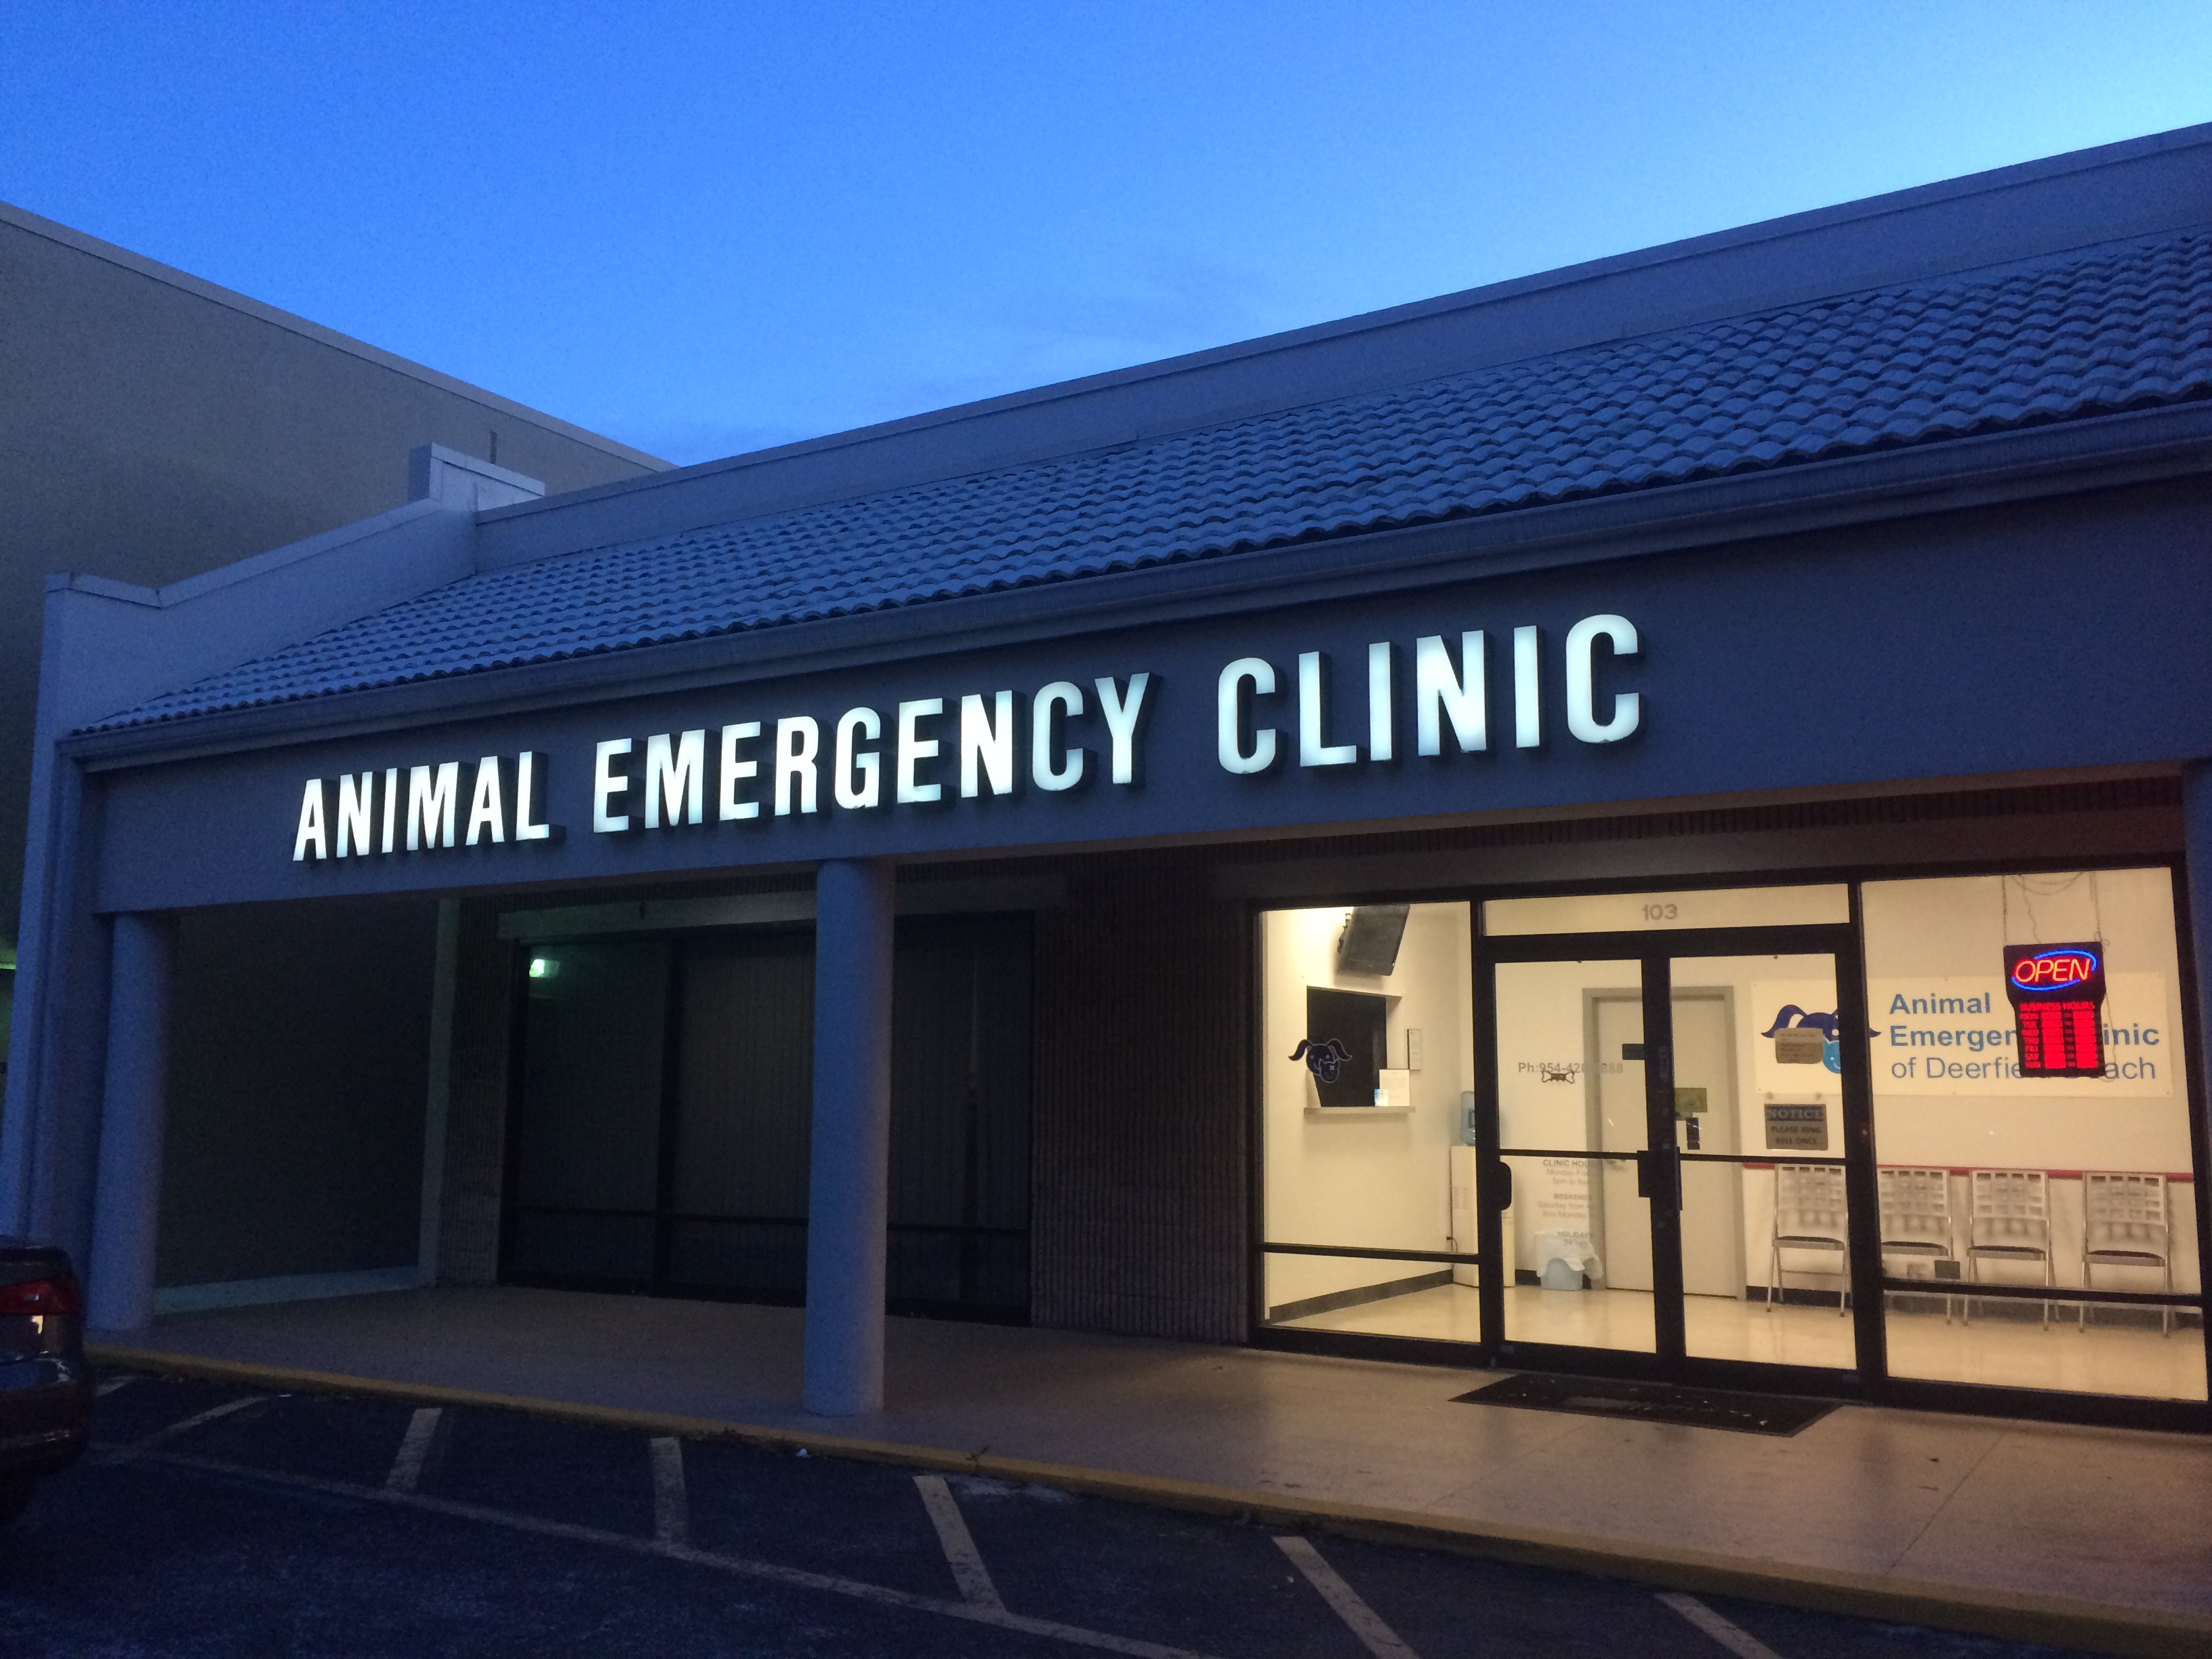 Deerfield animal care center information